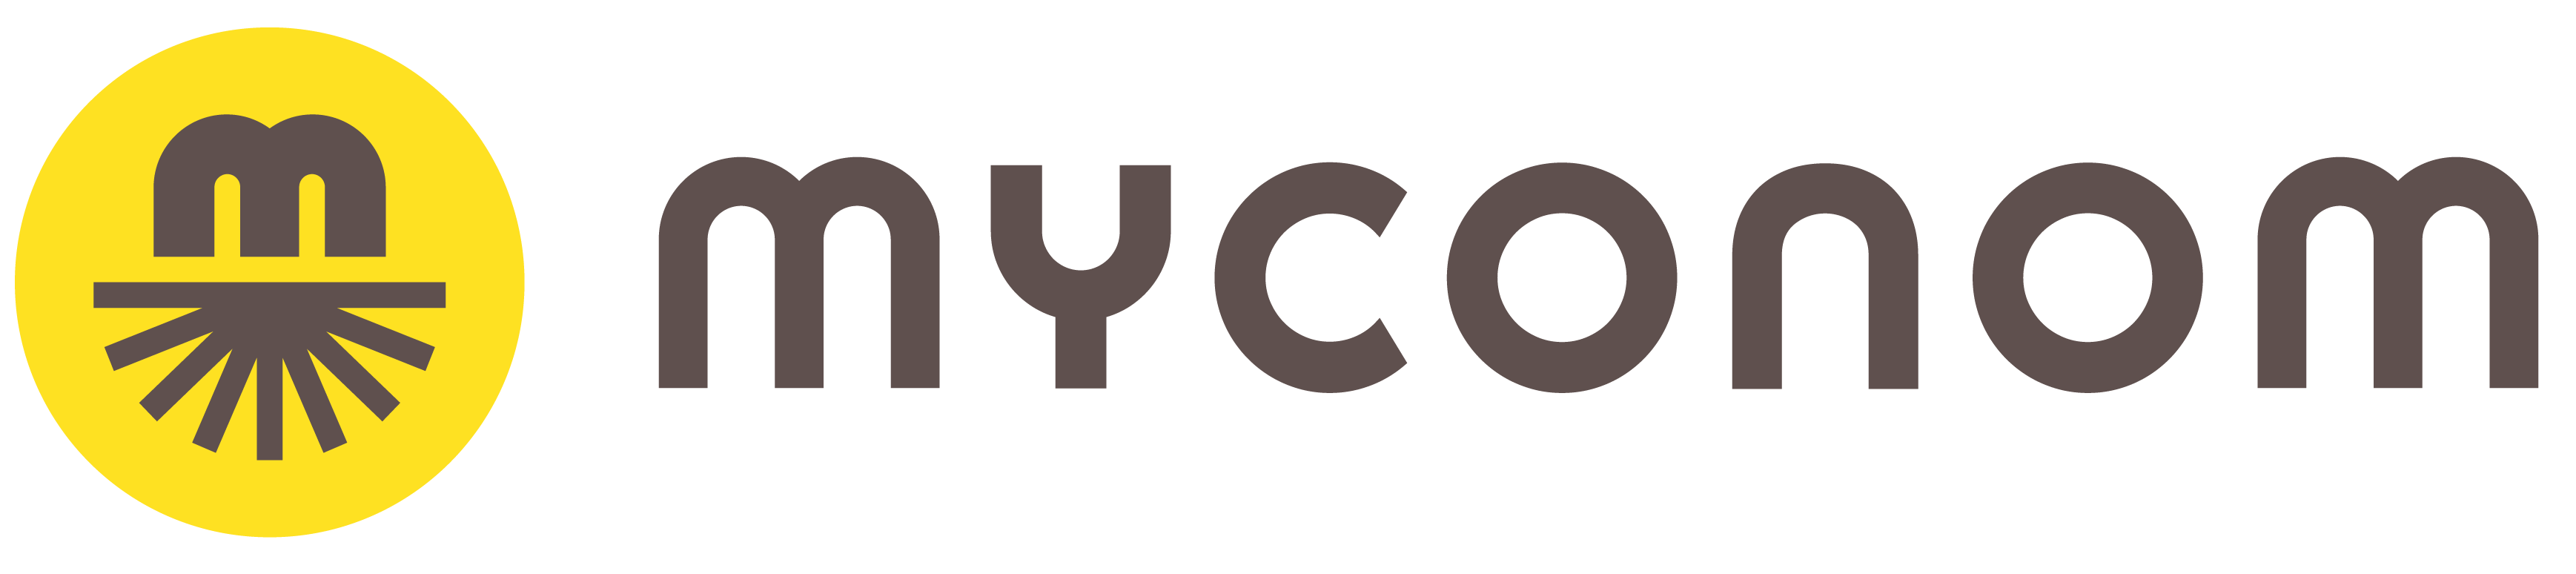 Myconom